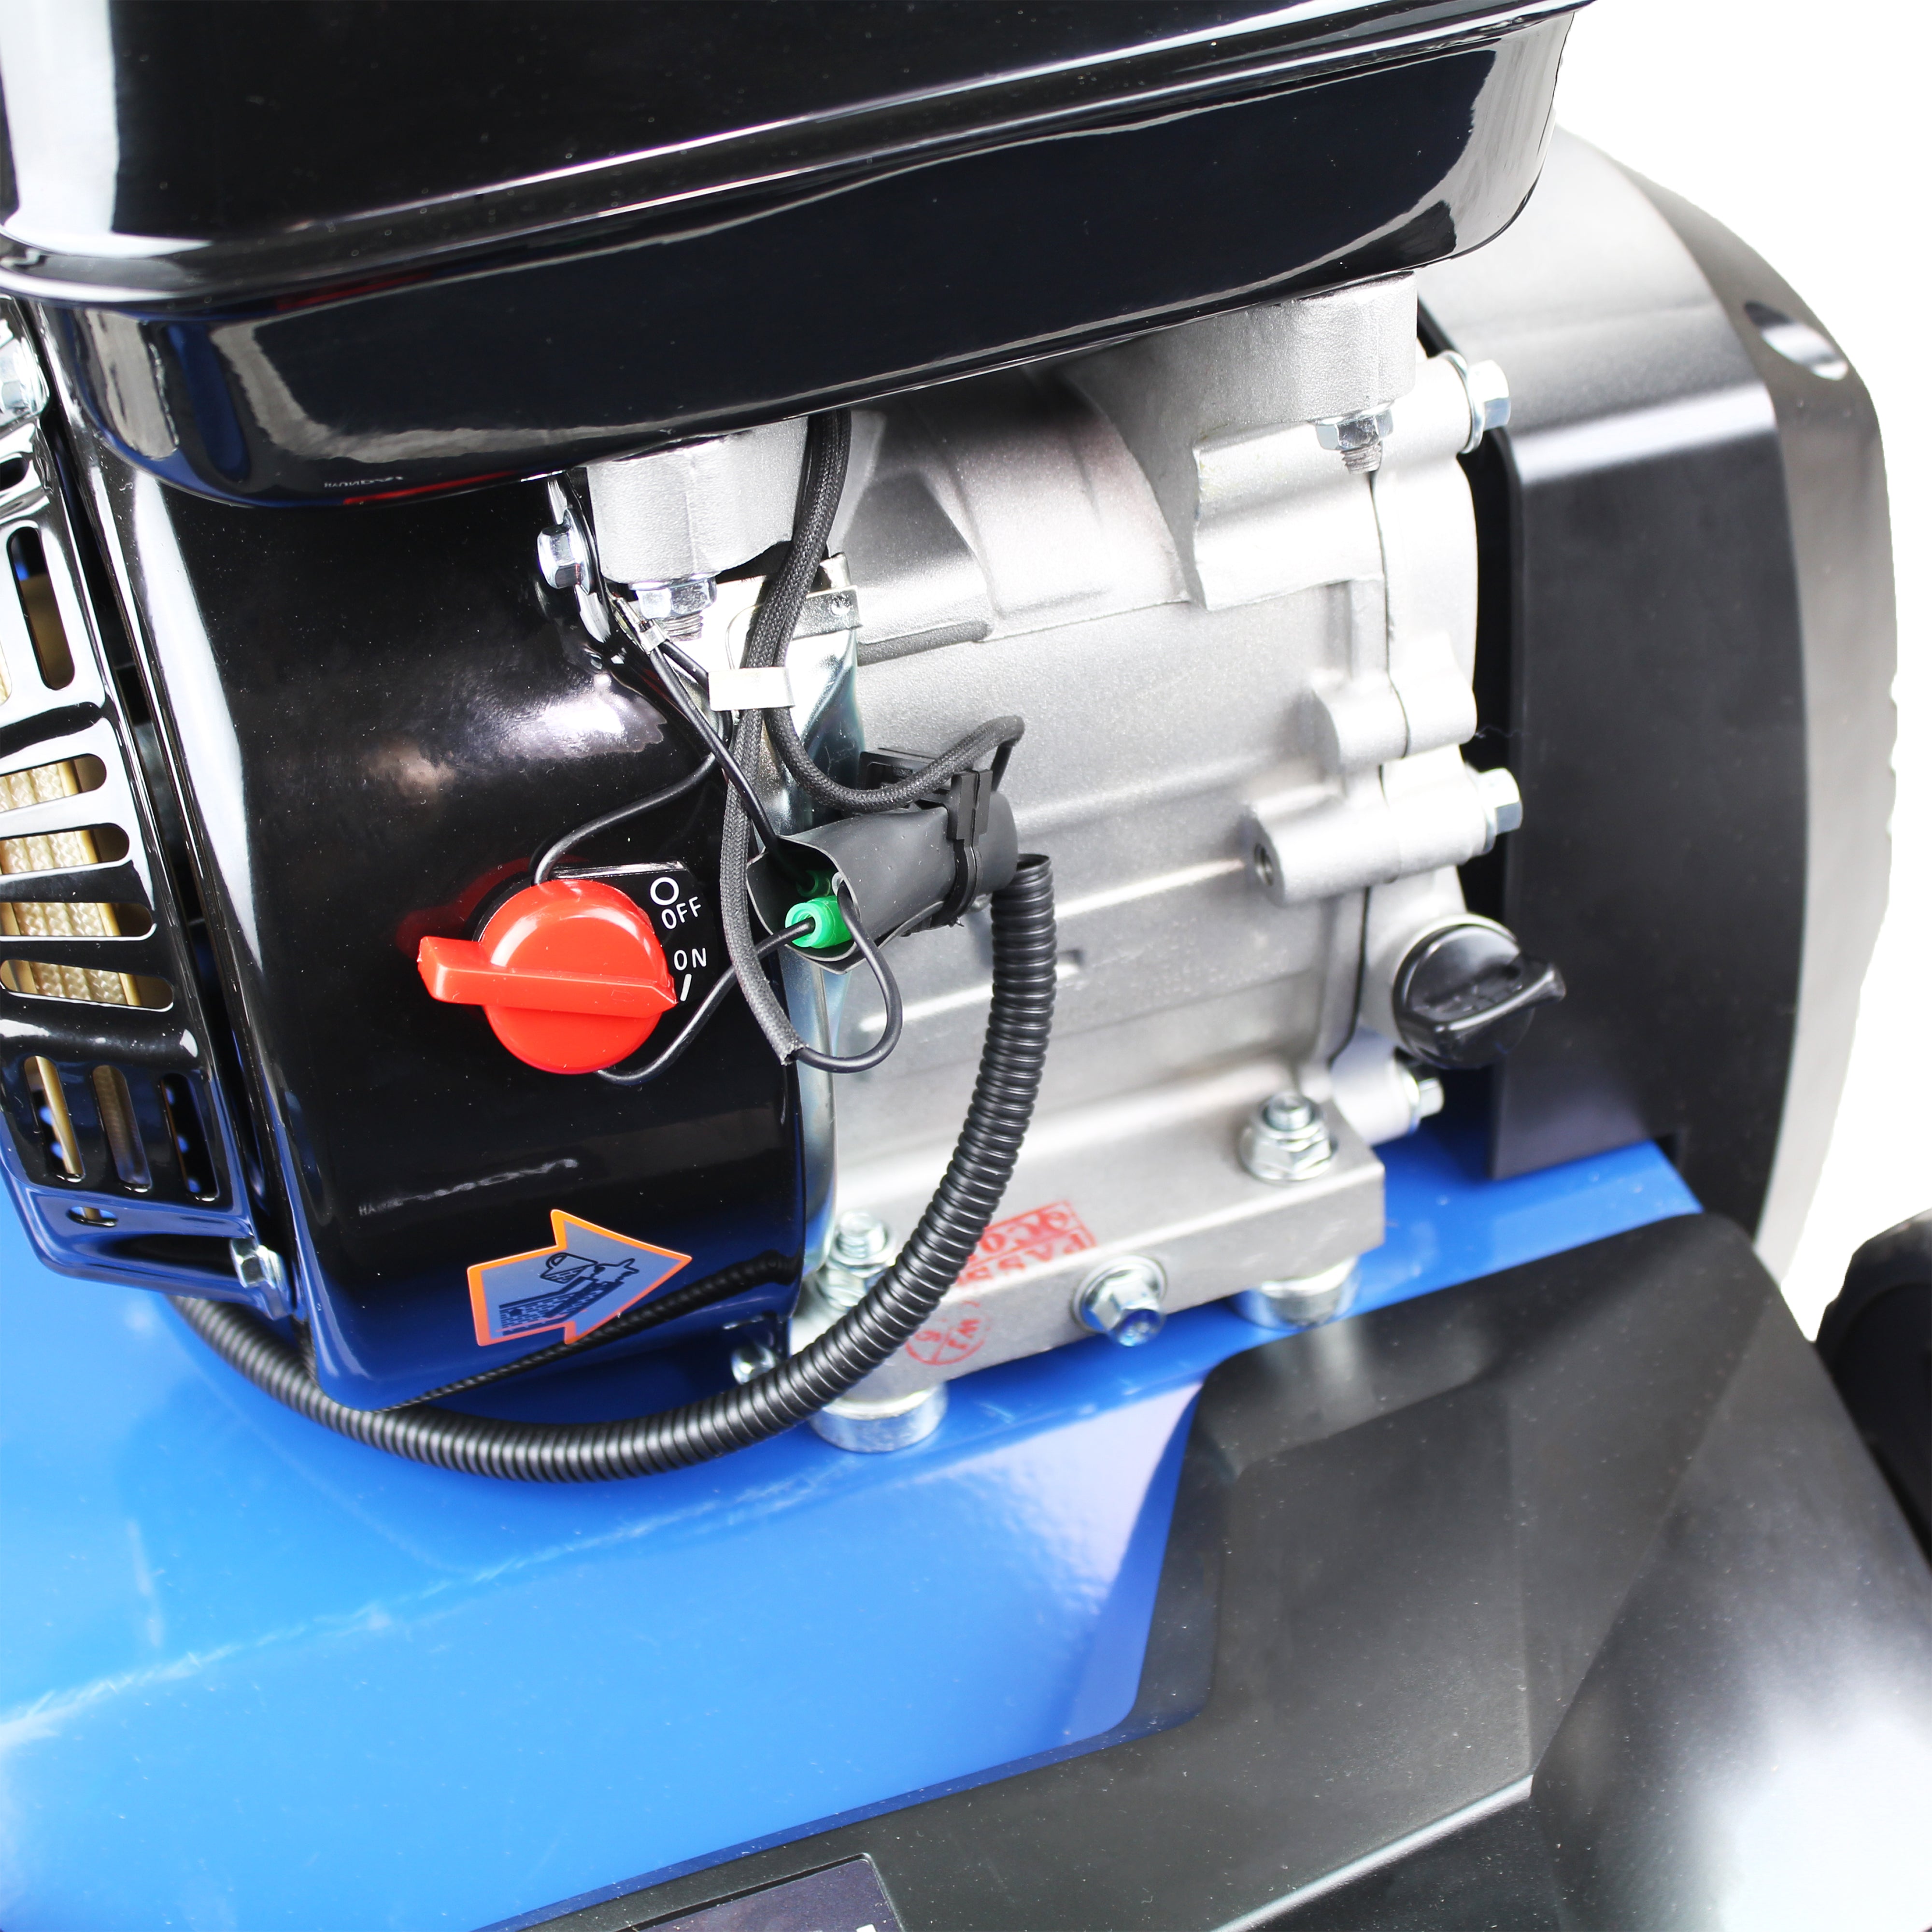 Hyundai 212cc Petrol Lawn Scarifier and Aerator